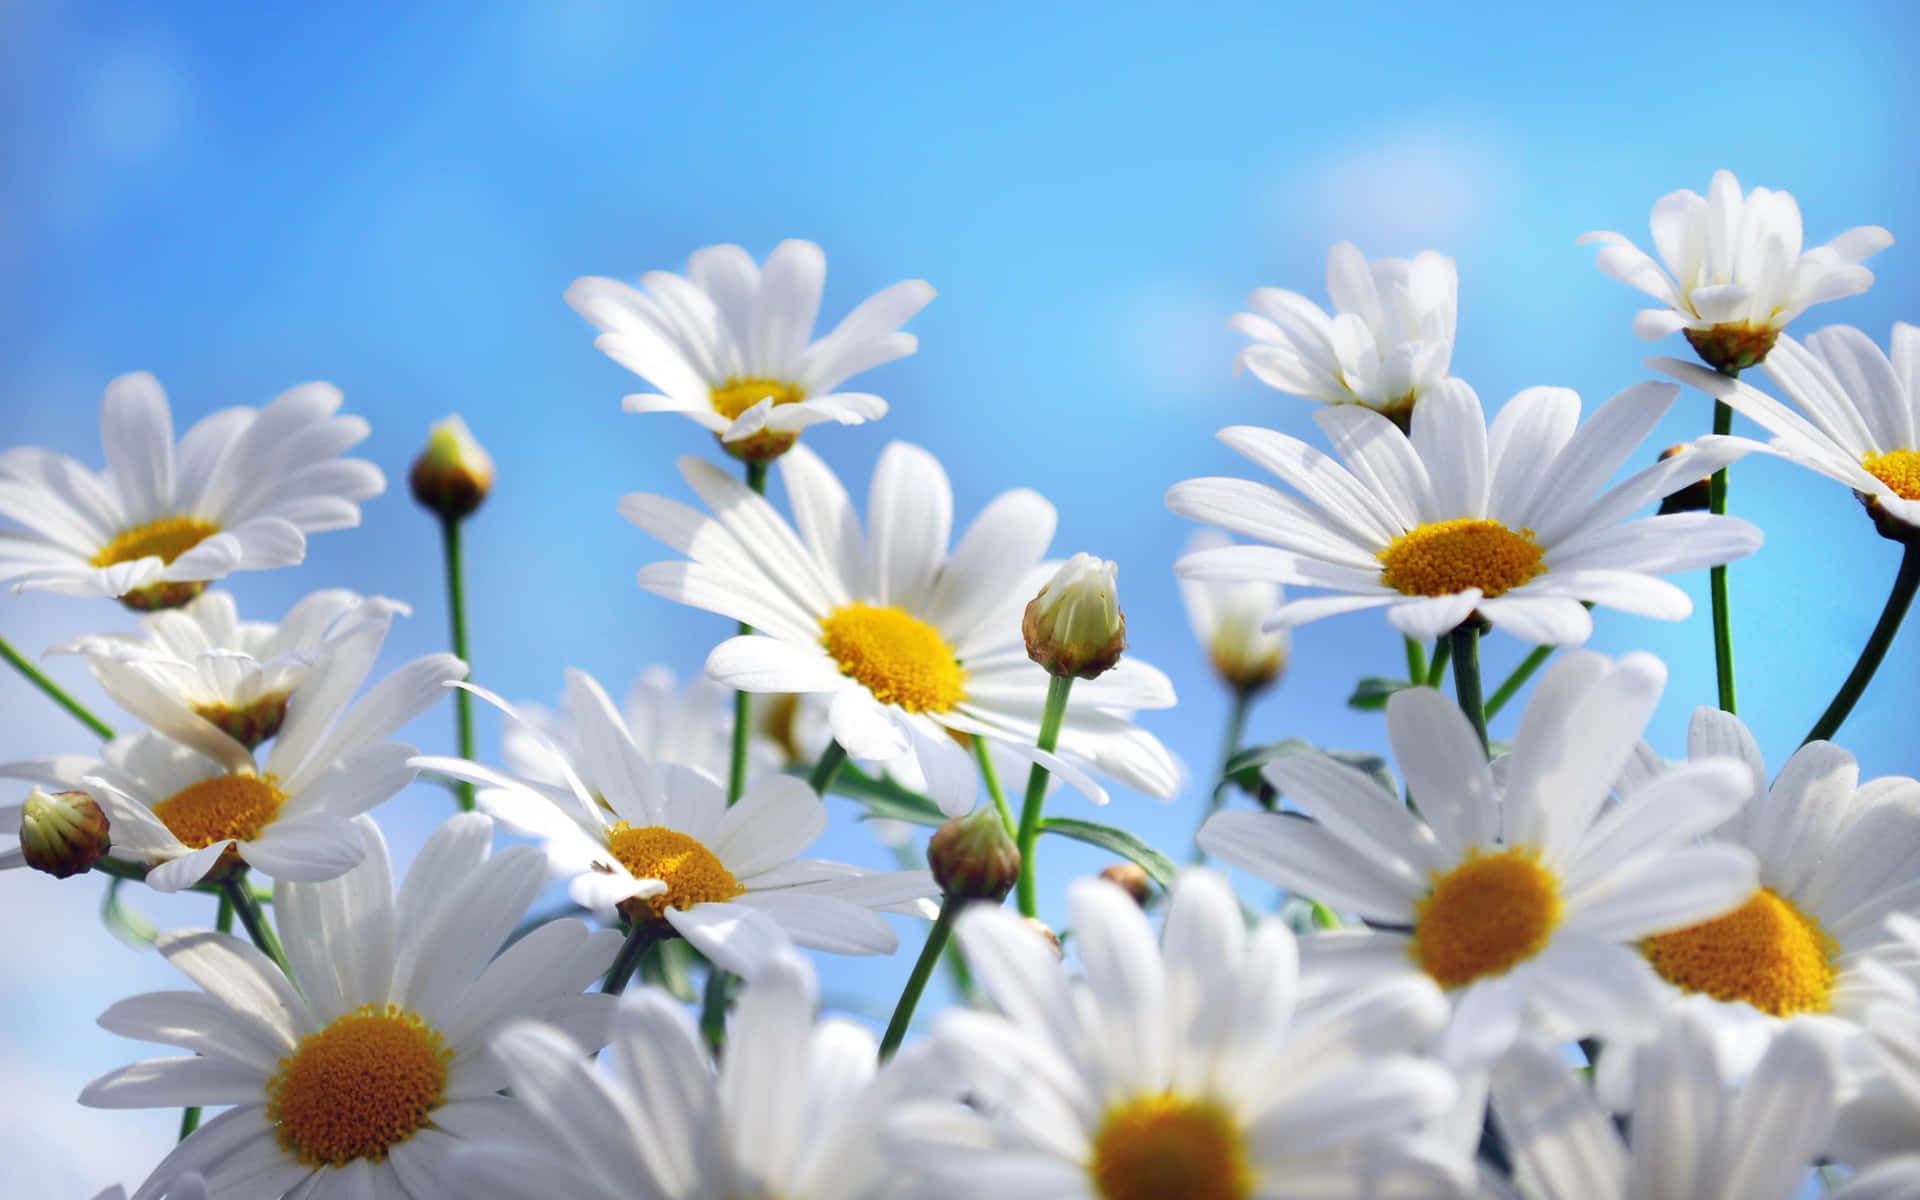 A beautiful daisy glistening in the sunshine